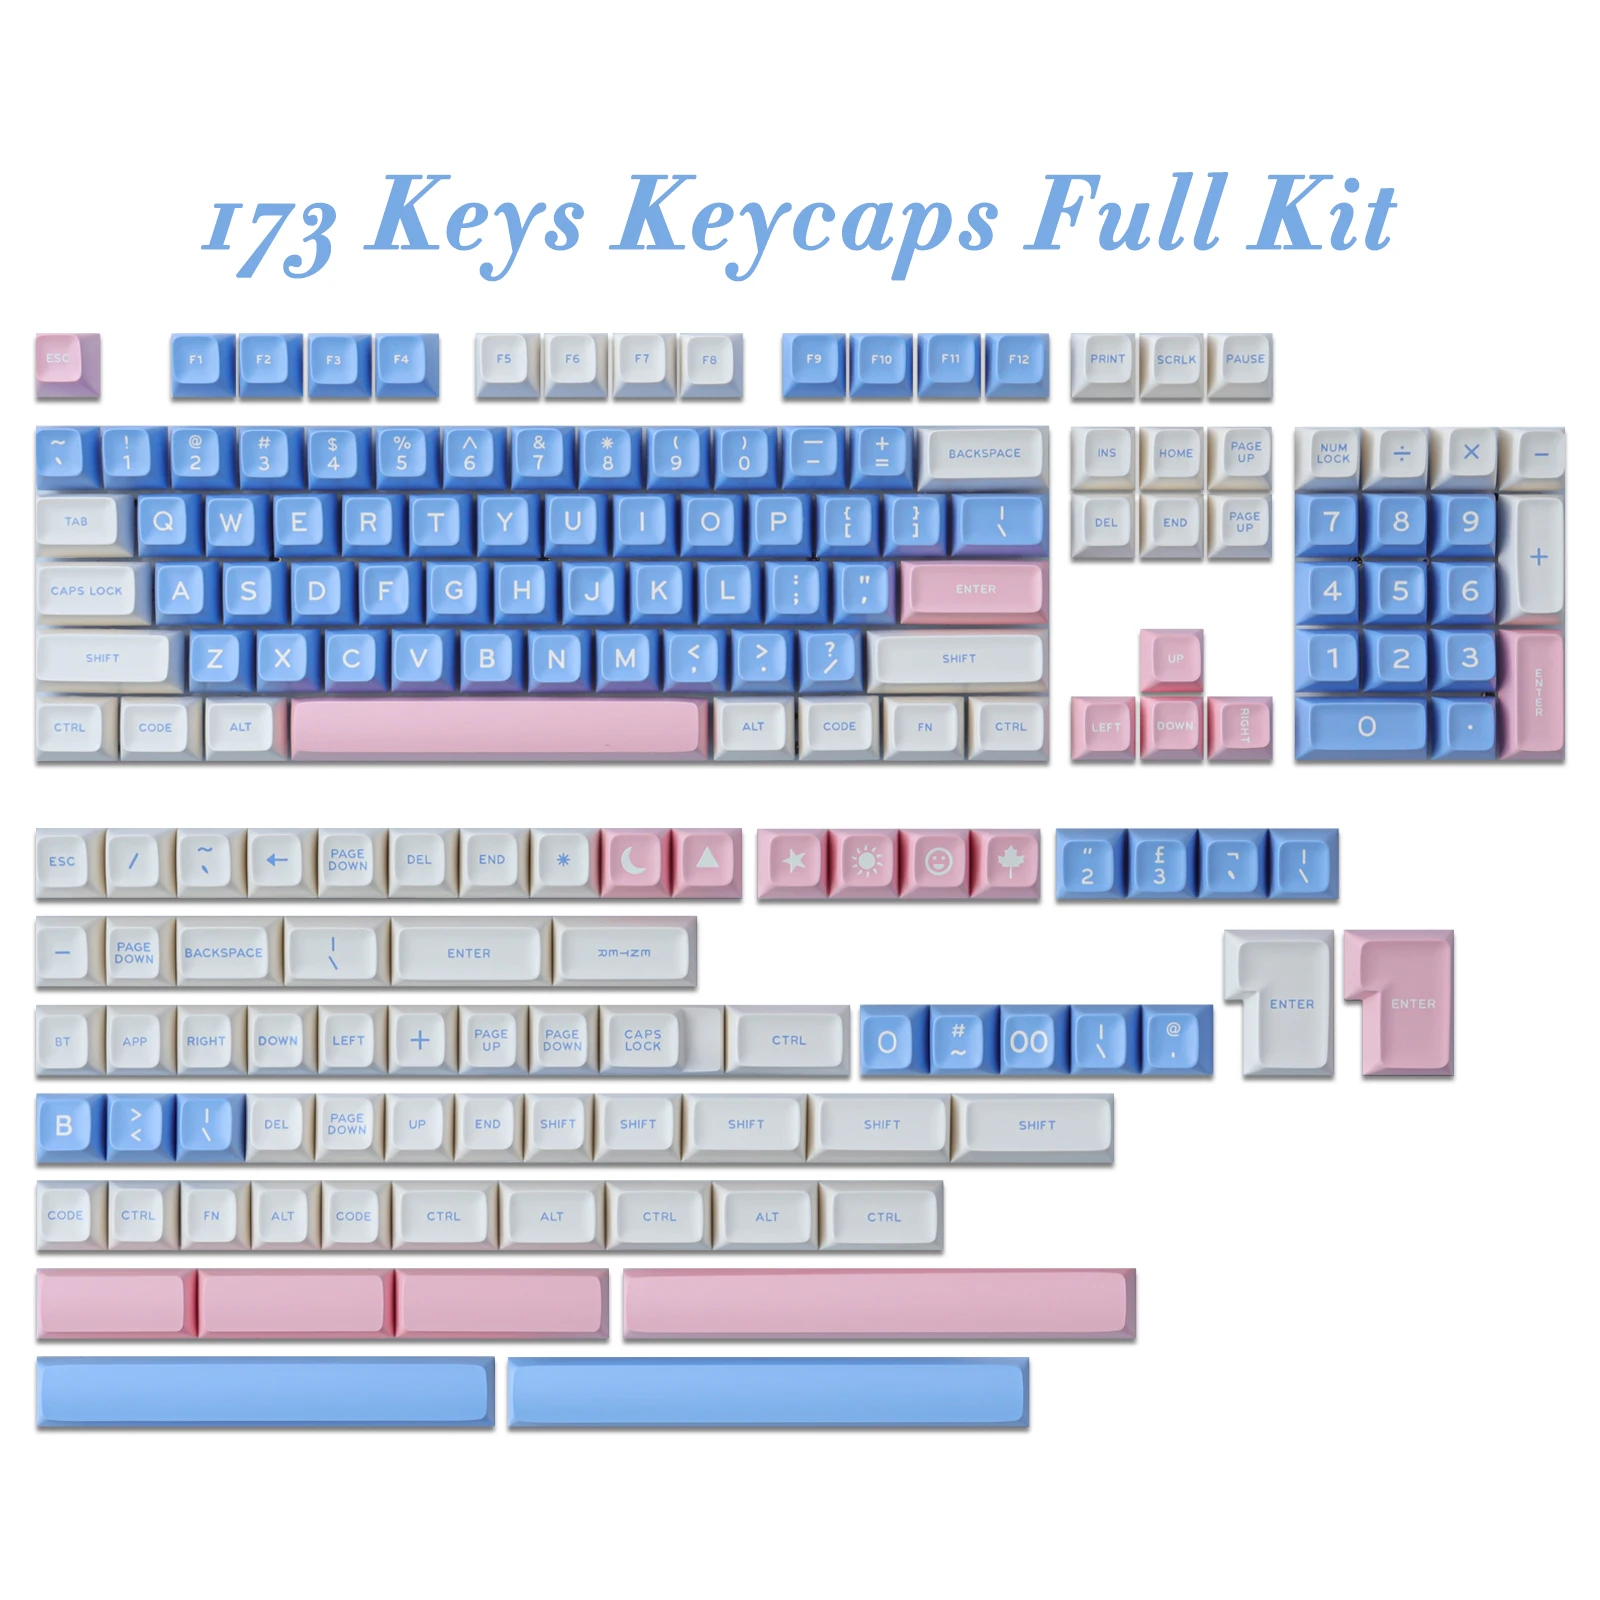 

GMK Gift keycap 173 keys ABS keycaps SA profile Double Shot custom gmk keycaps for mechanical keyboard